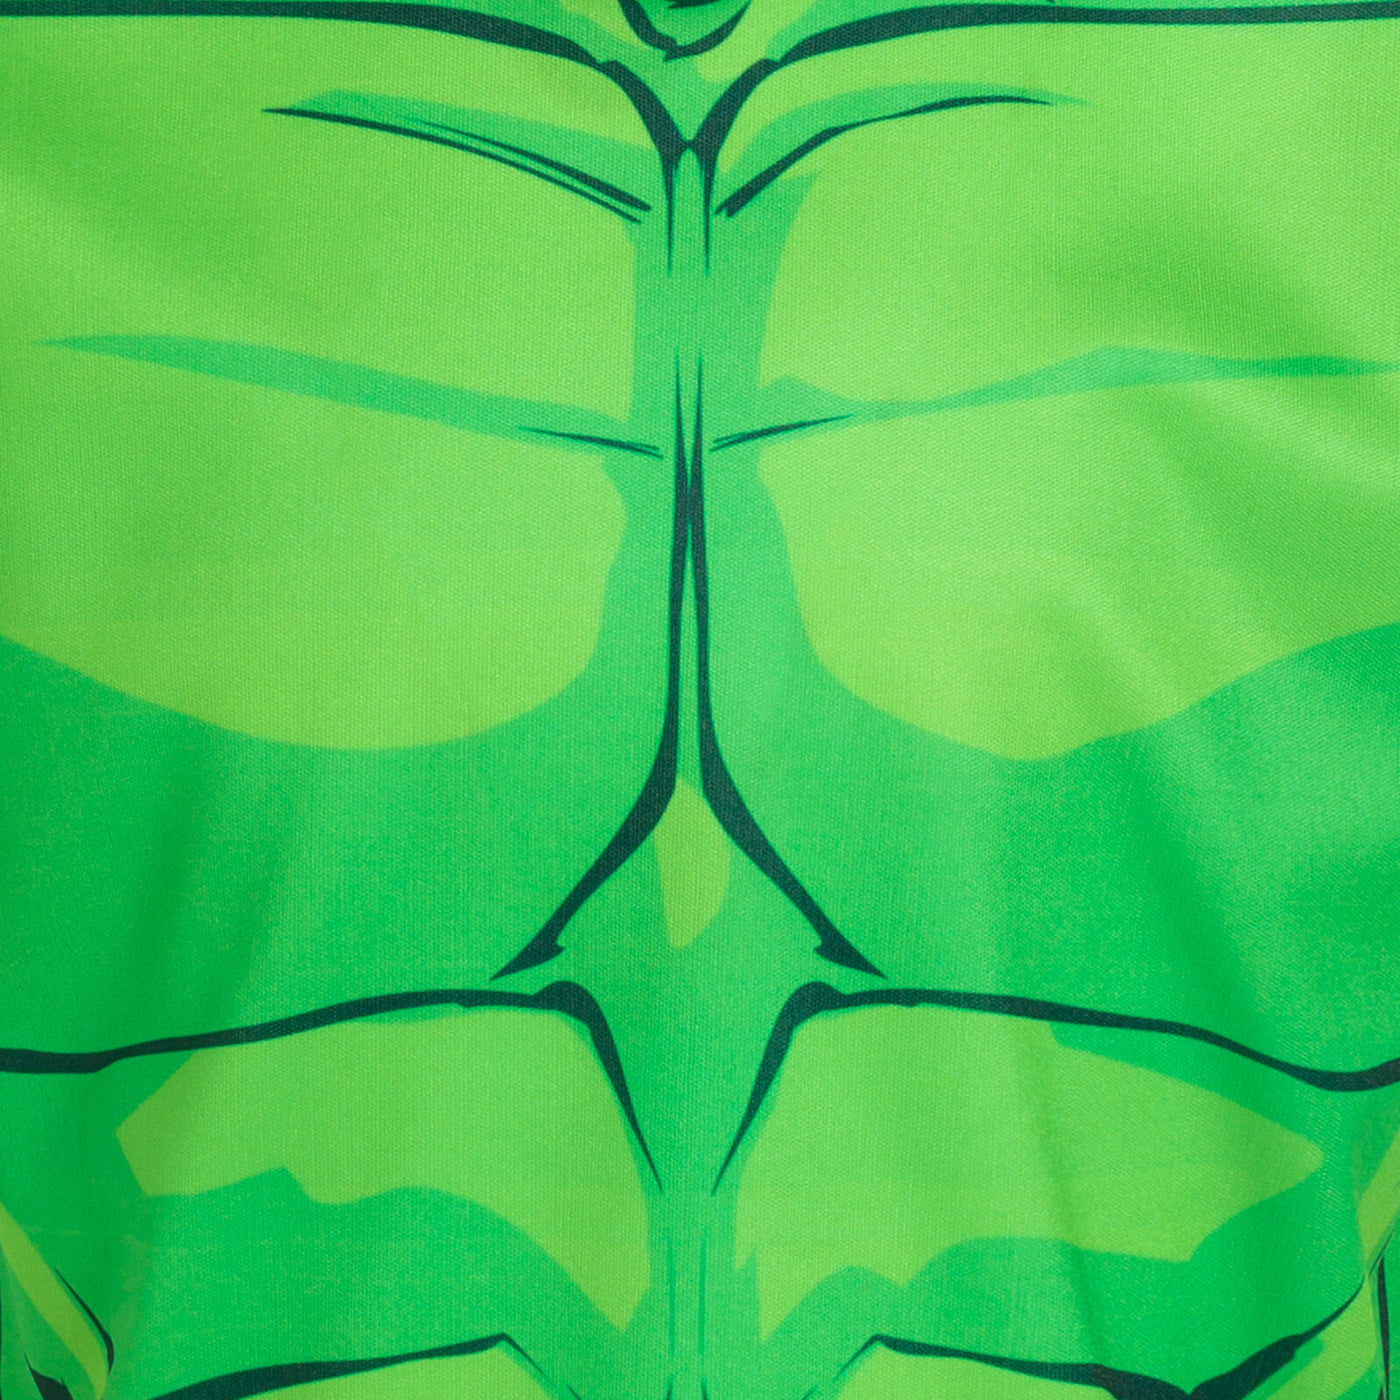 Marvel Avengers The Hulk Mesh Athletic T-Shirt Shorts Outfit Set